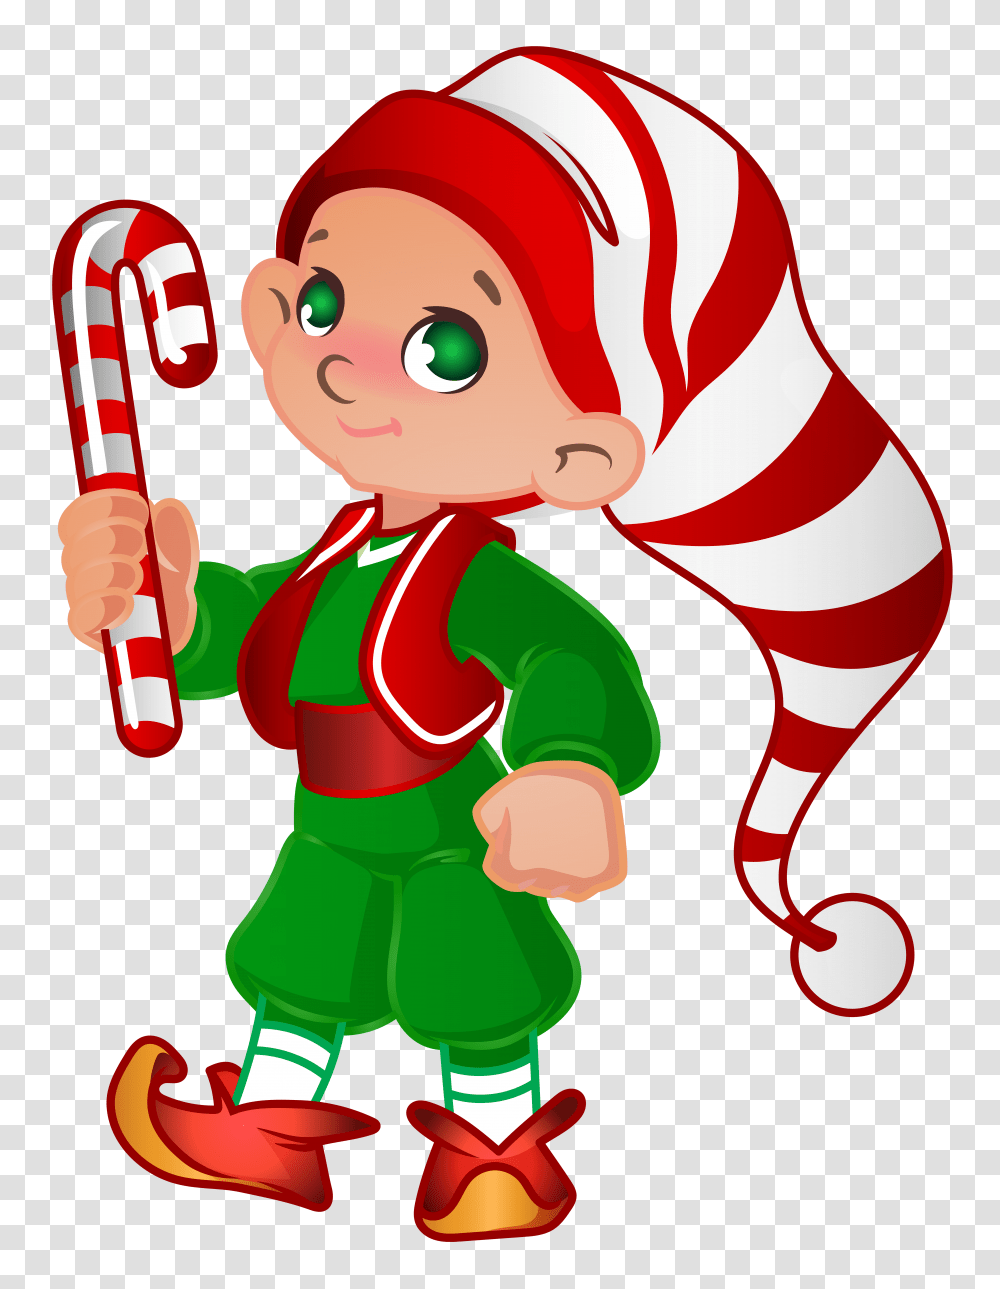 Free Christmas Elf Clip Art Image, Costume, Poster Transparent Png